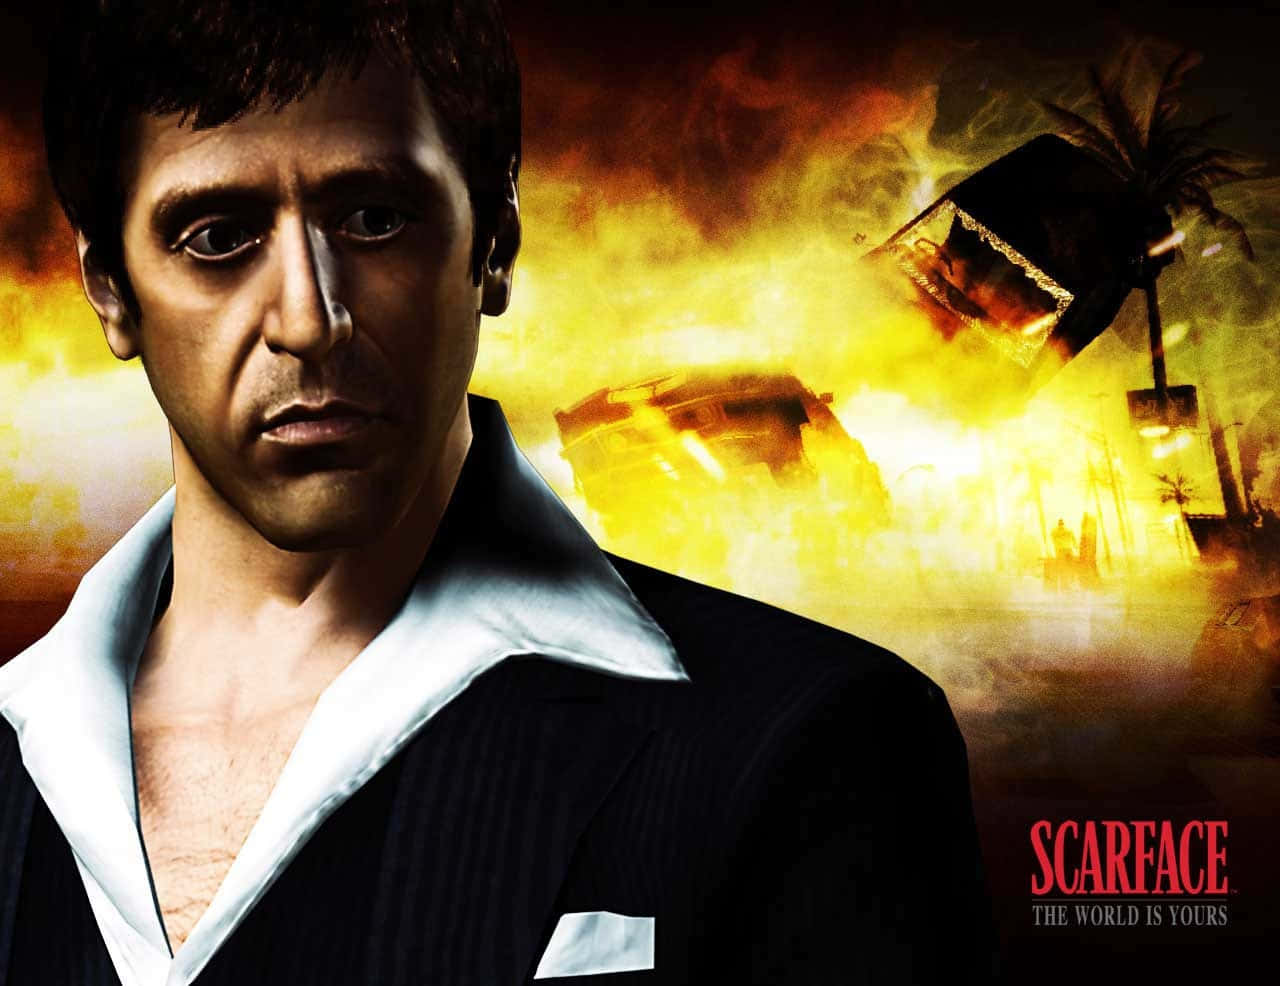 Al Pacino stars as the iconic Tony Montana in Scarface